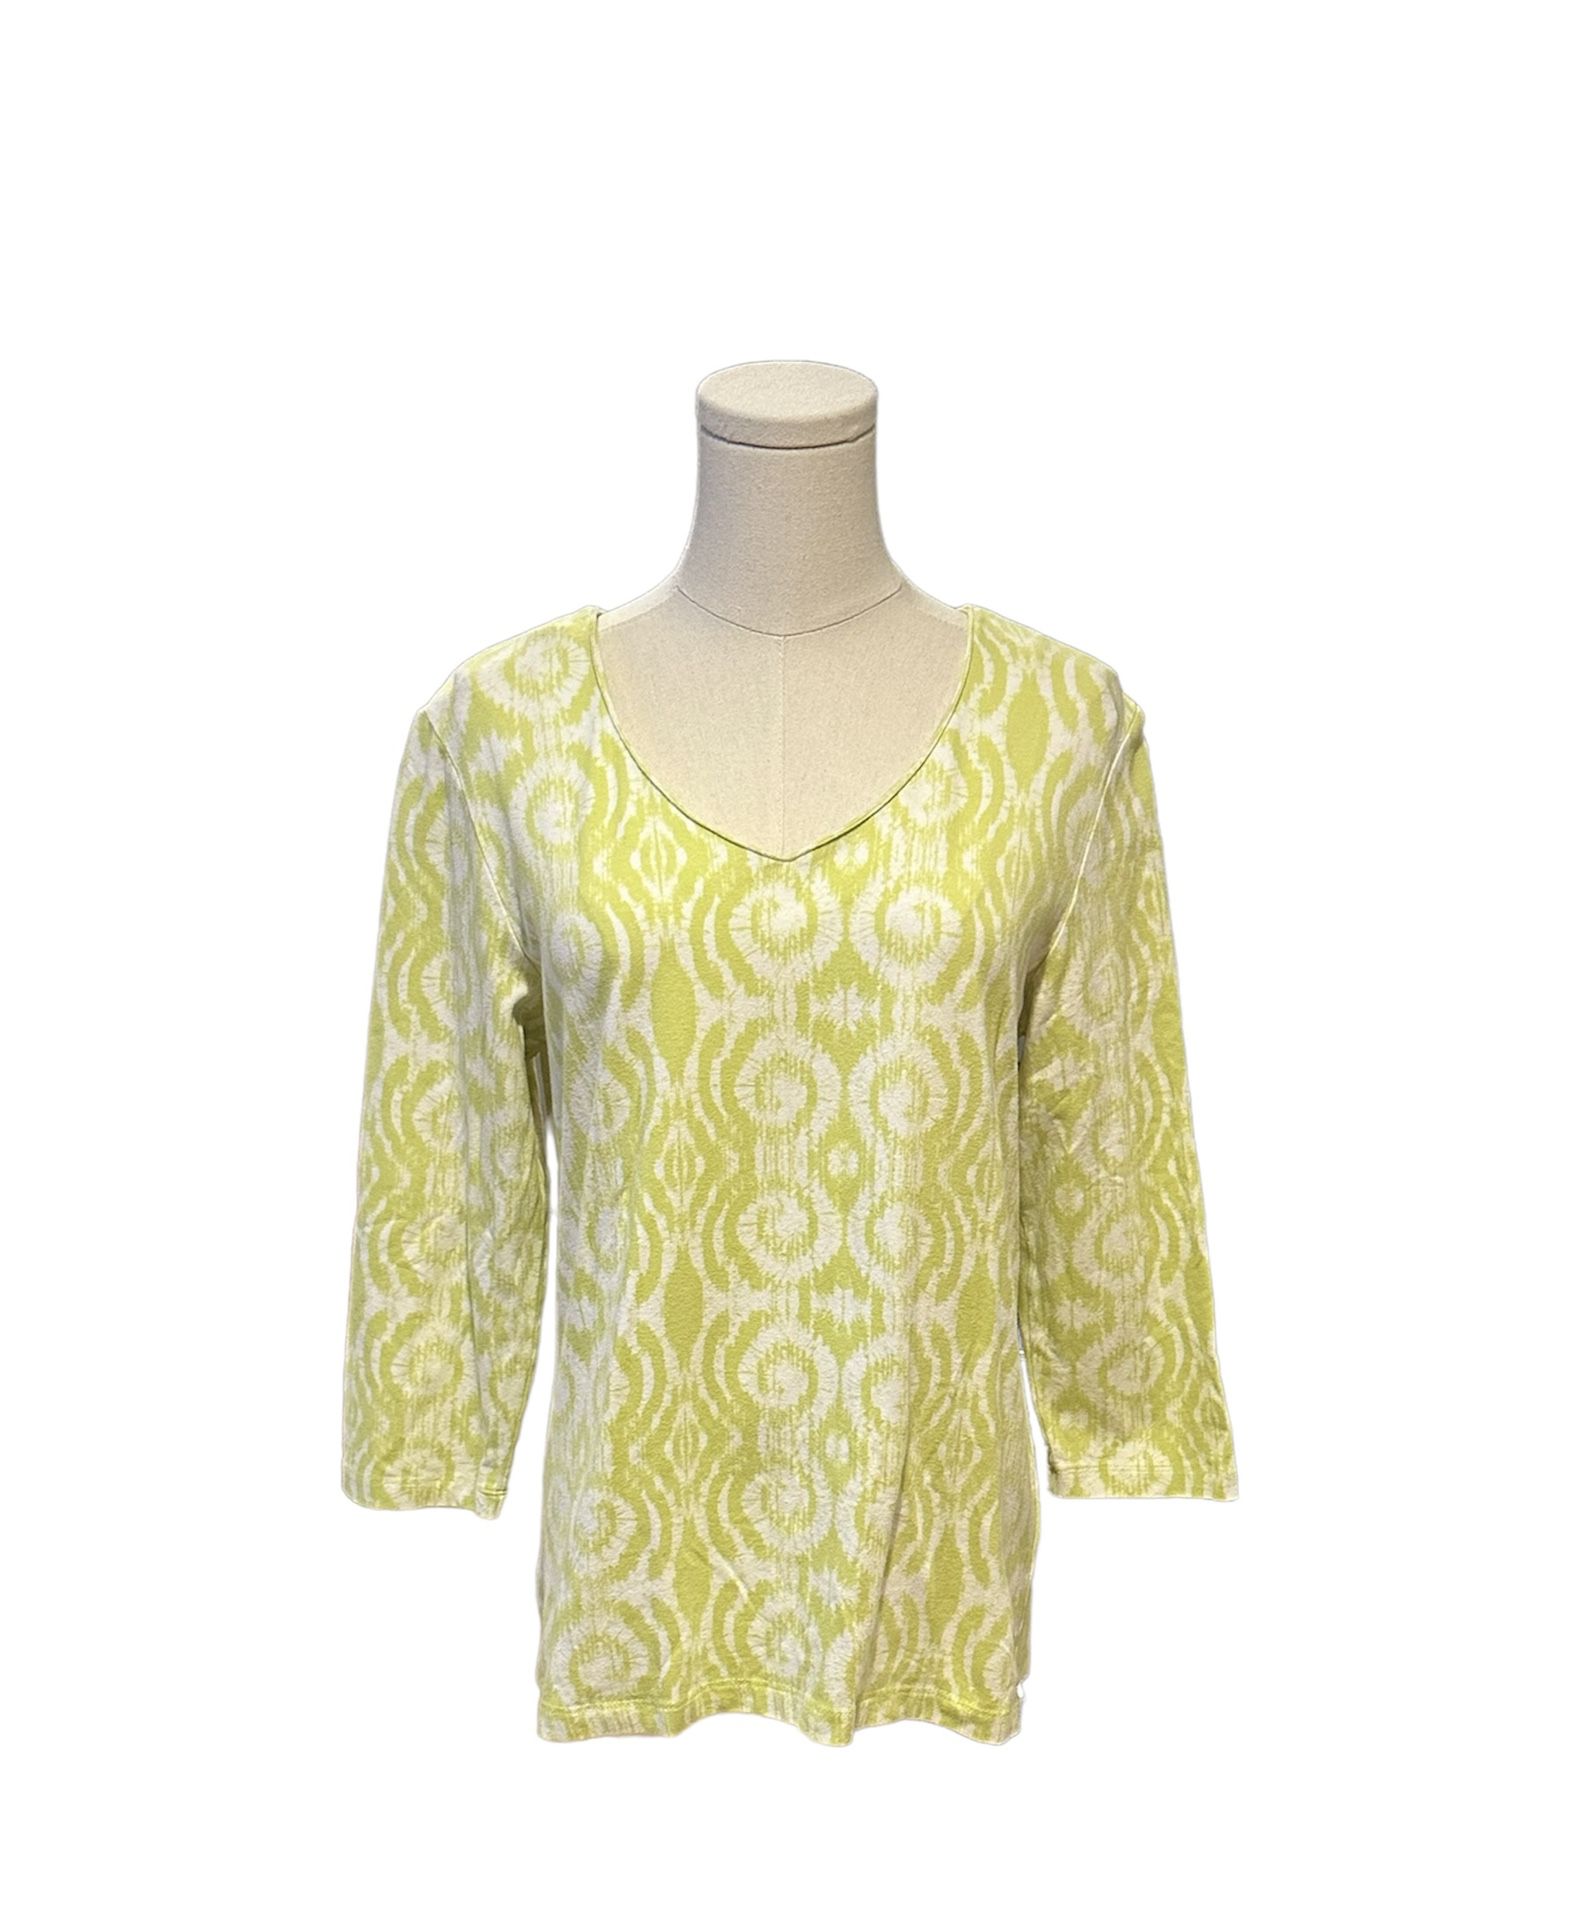 Ruby Rd. Women Green / Yellow Wave Design Floral Long Sleeve Blouse Sz Medium